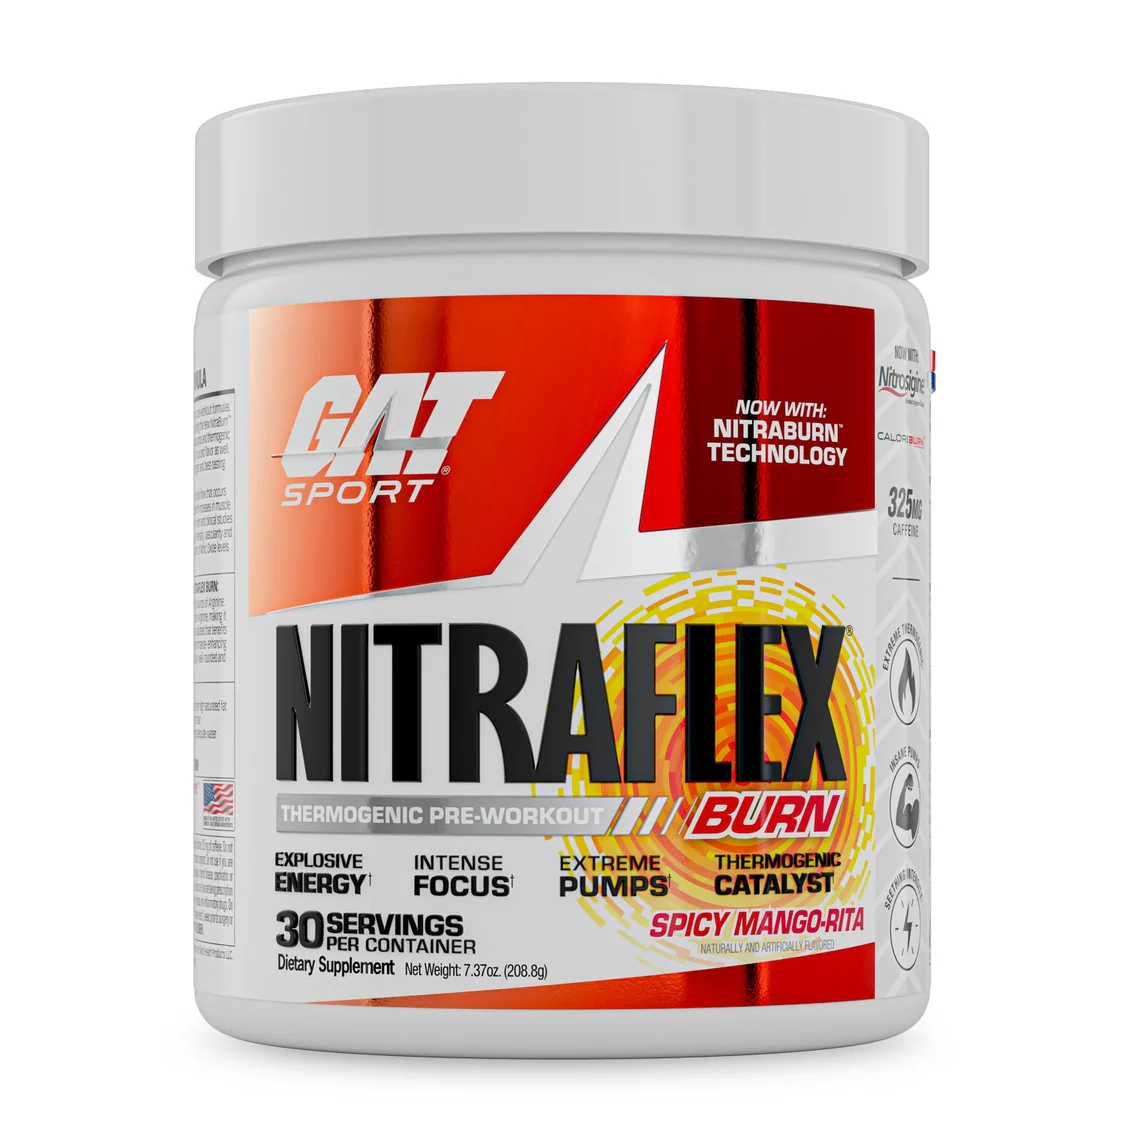 Gat Sport, Title Nitraflex Thermogenic Pre-Workout